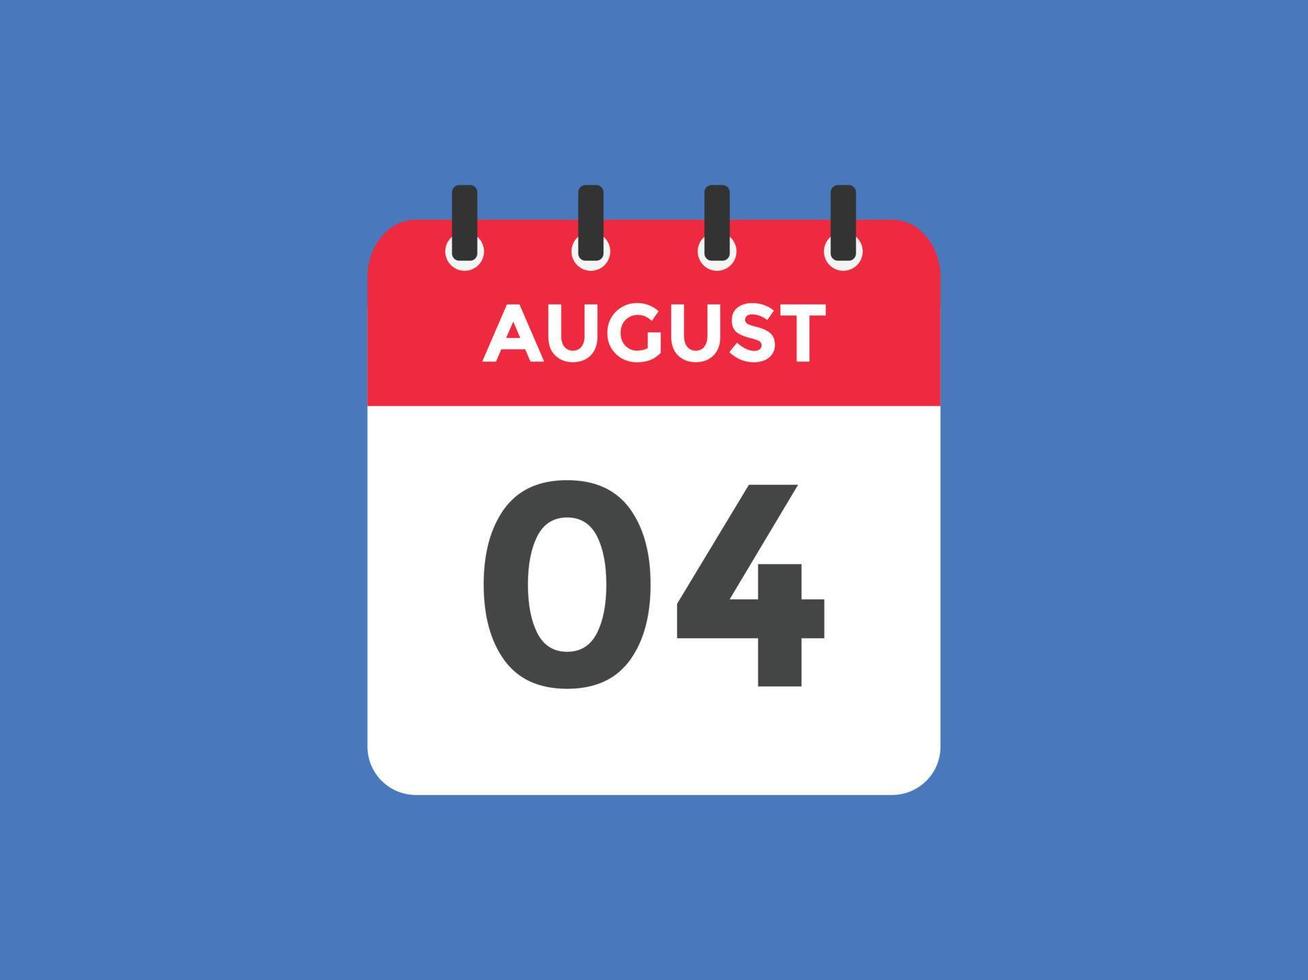 augusti 4 kalender påminnelse. 4:e augusti dagligen kalender ikon mall. kalender 4:e augusti ikon design mall. vektor illustration